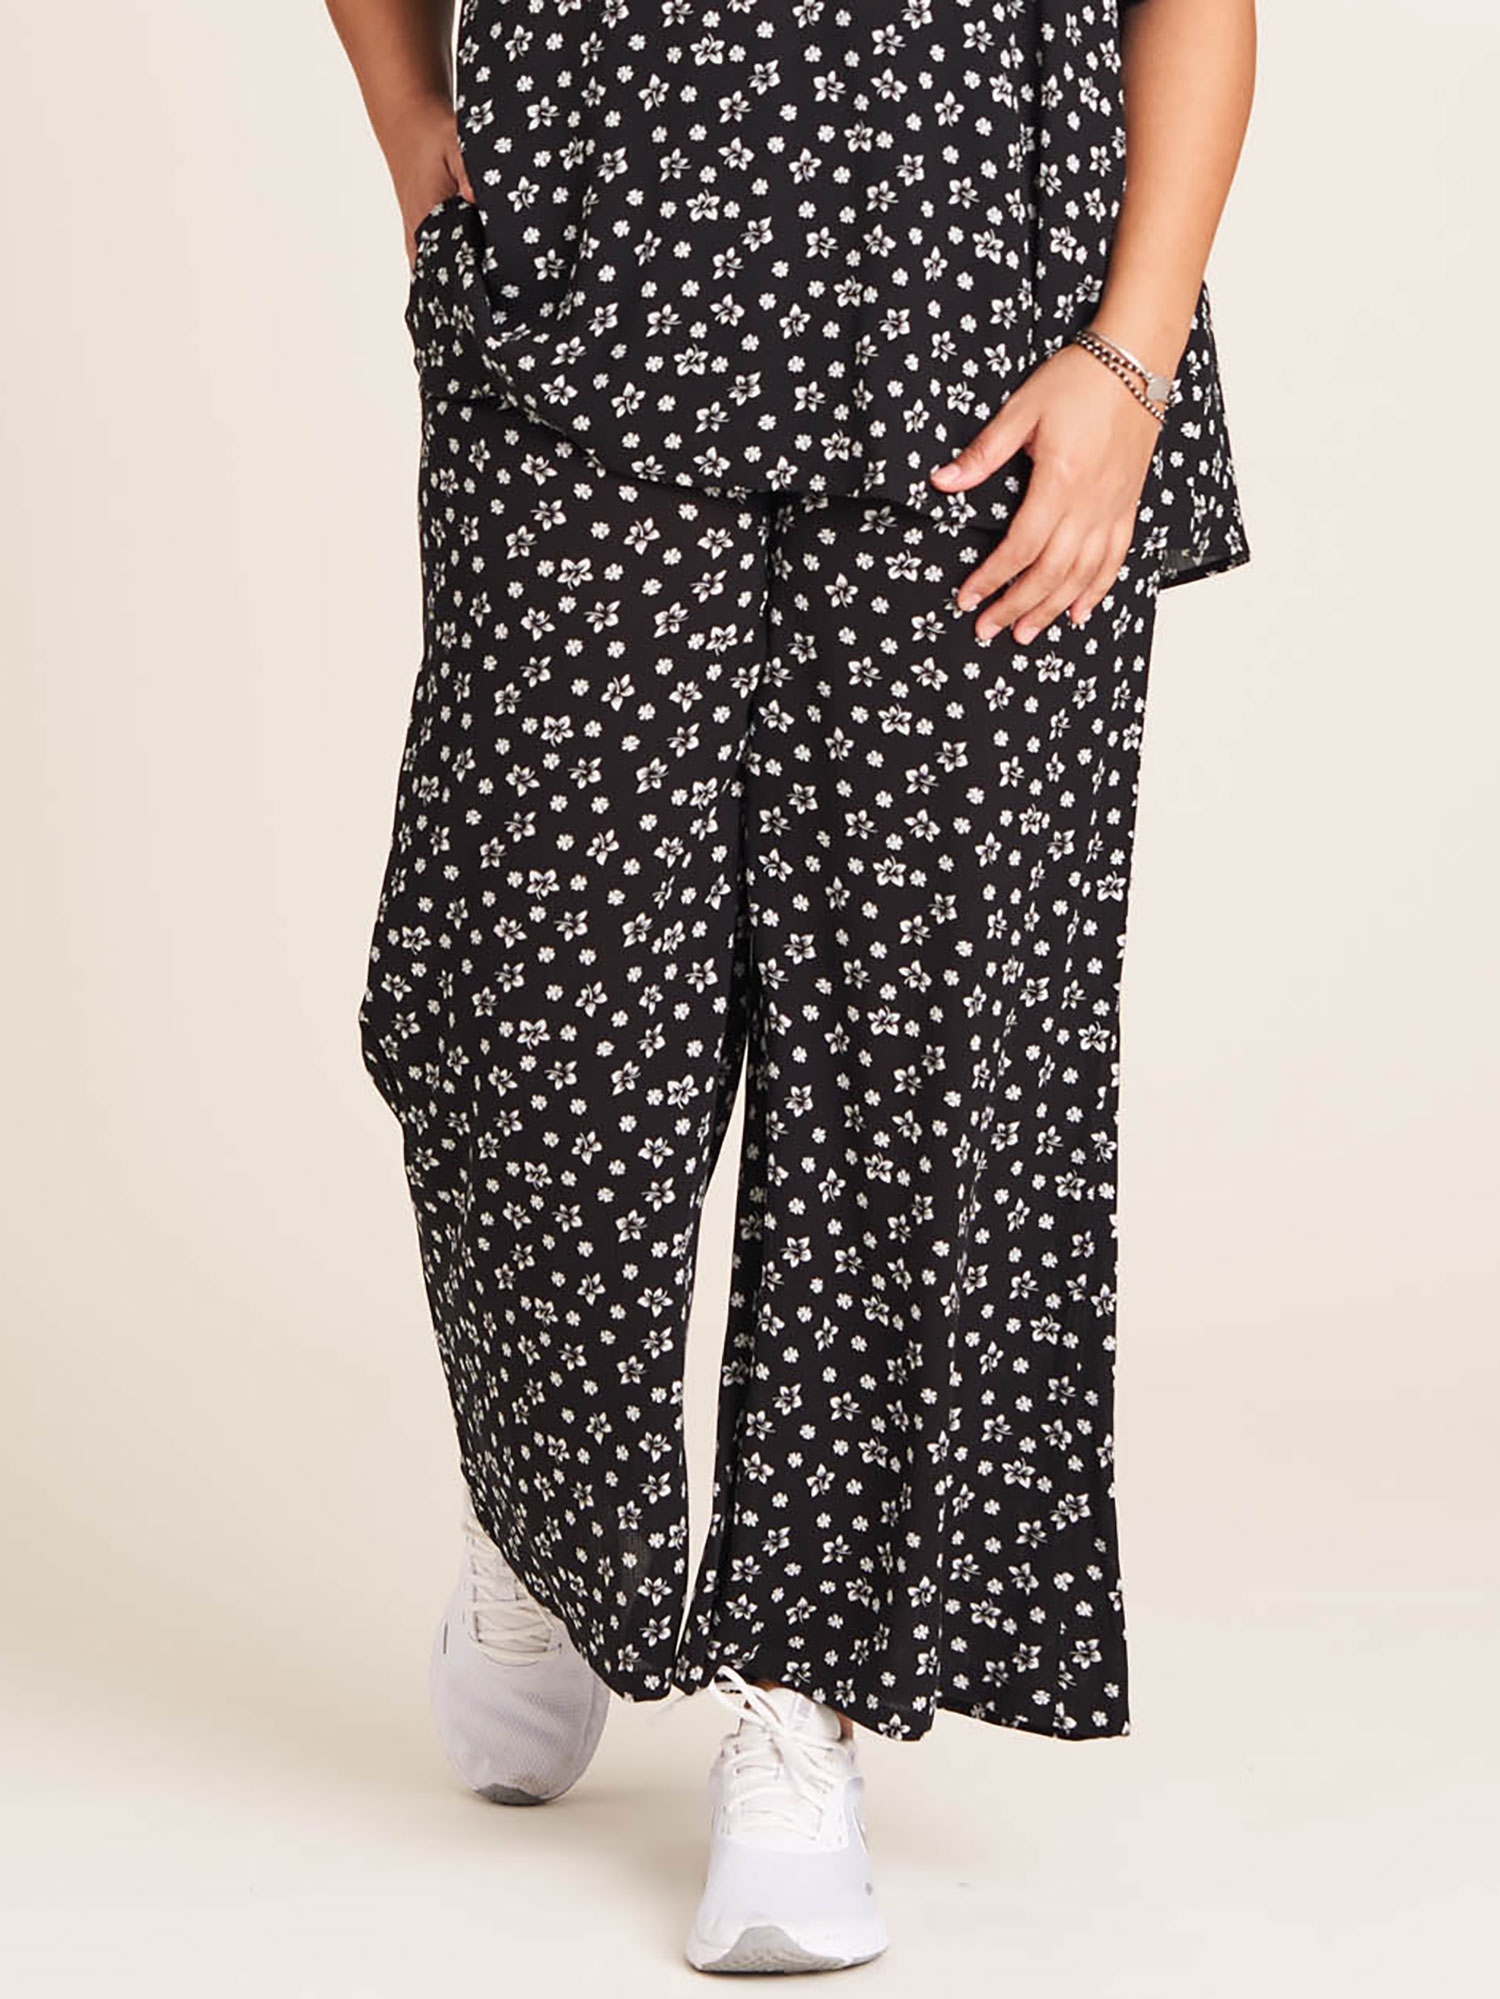 RENATE - Lette Sorte bukser med brede ben og fine små hvide blomster fra Studio